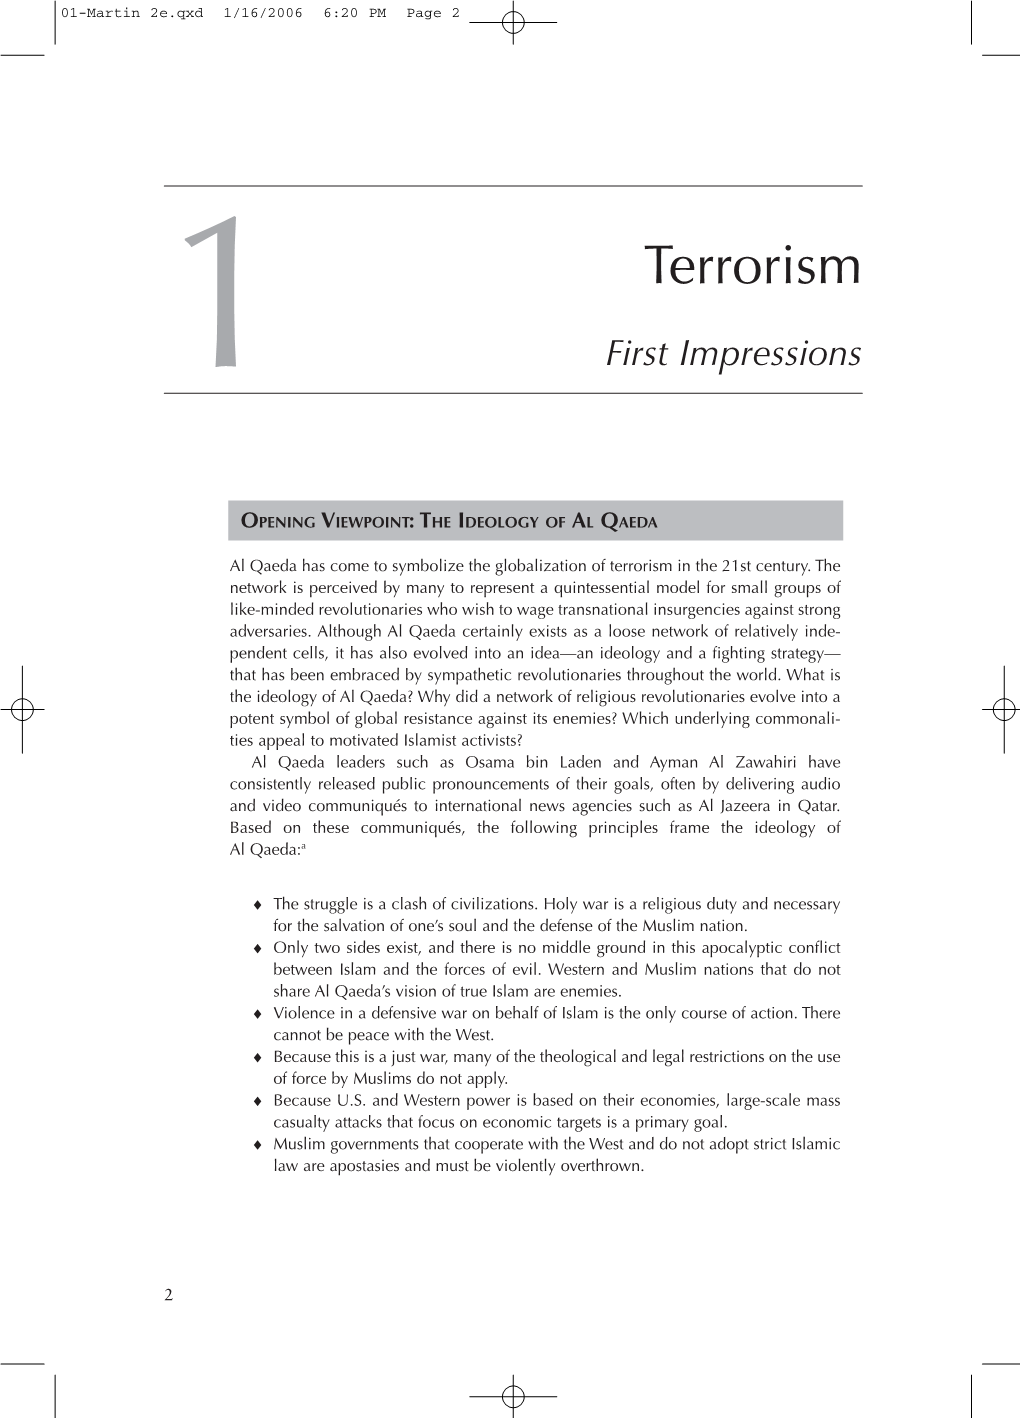 Terrorism 1 First Impressions